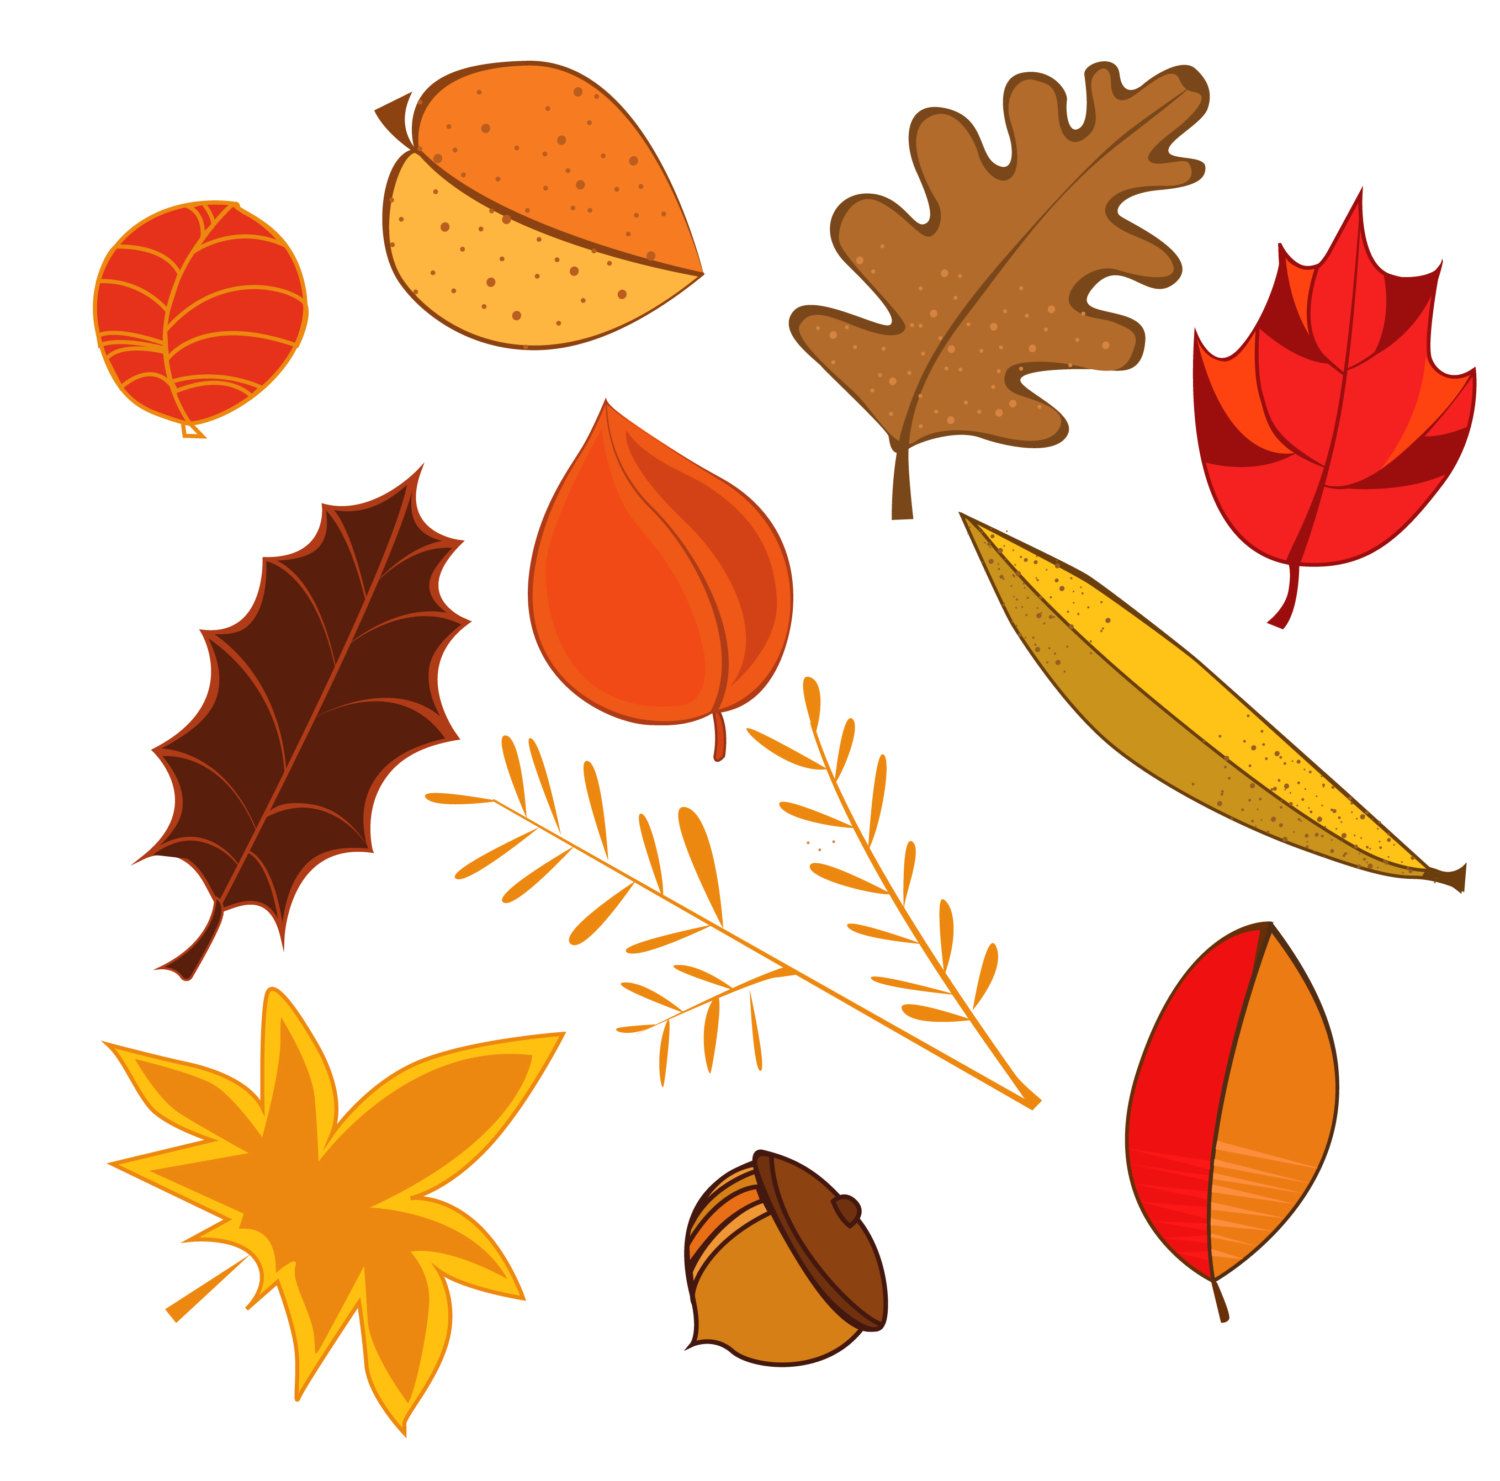 Autumn leaves clip art, leaves cliparts, autumn clipart